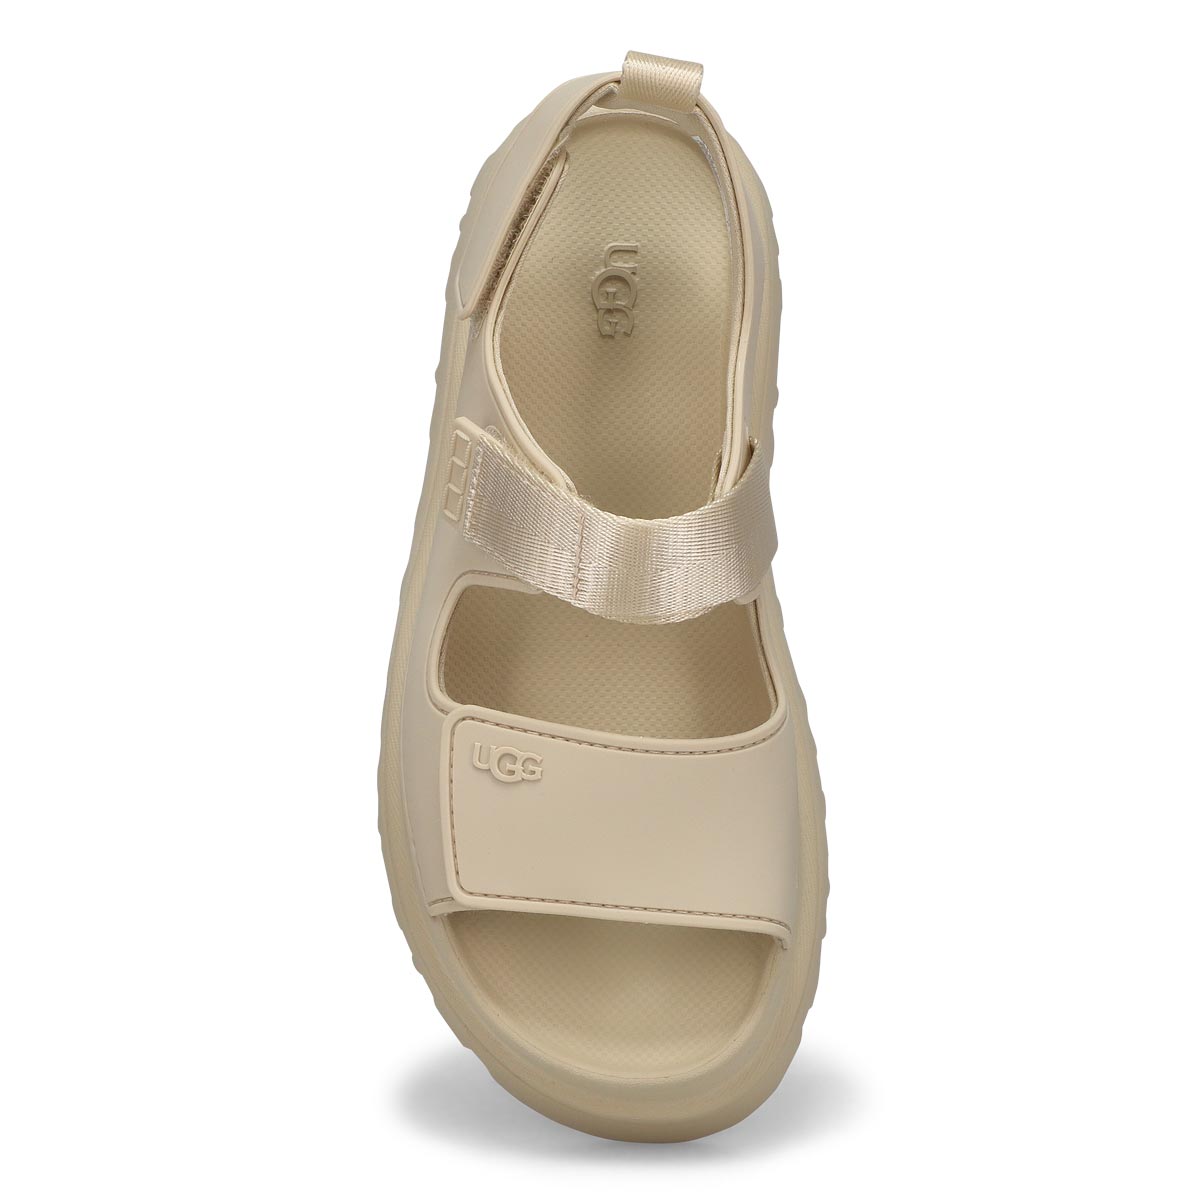 UGG Ladies Golden Glow Platform Sandal - Mang | SoftMoc.com